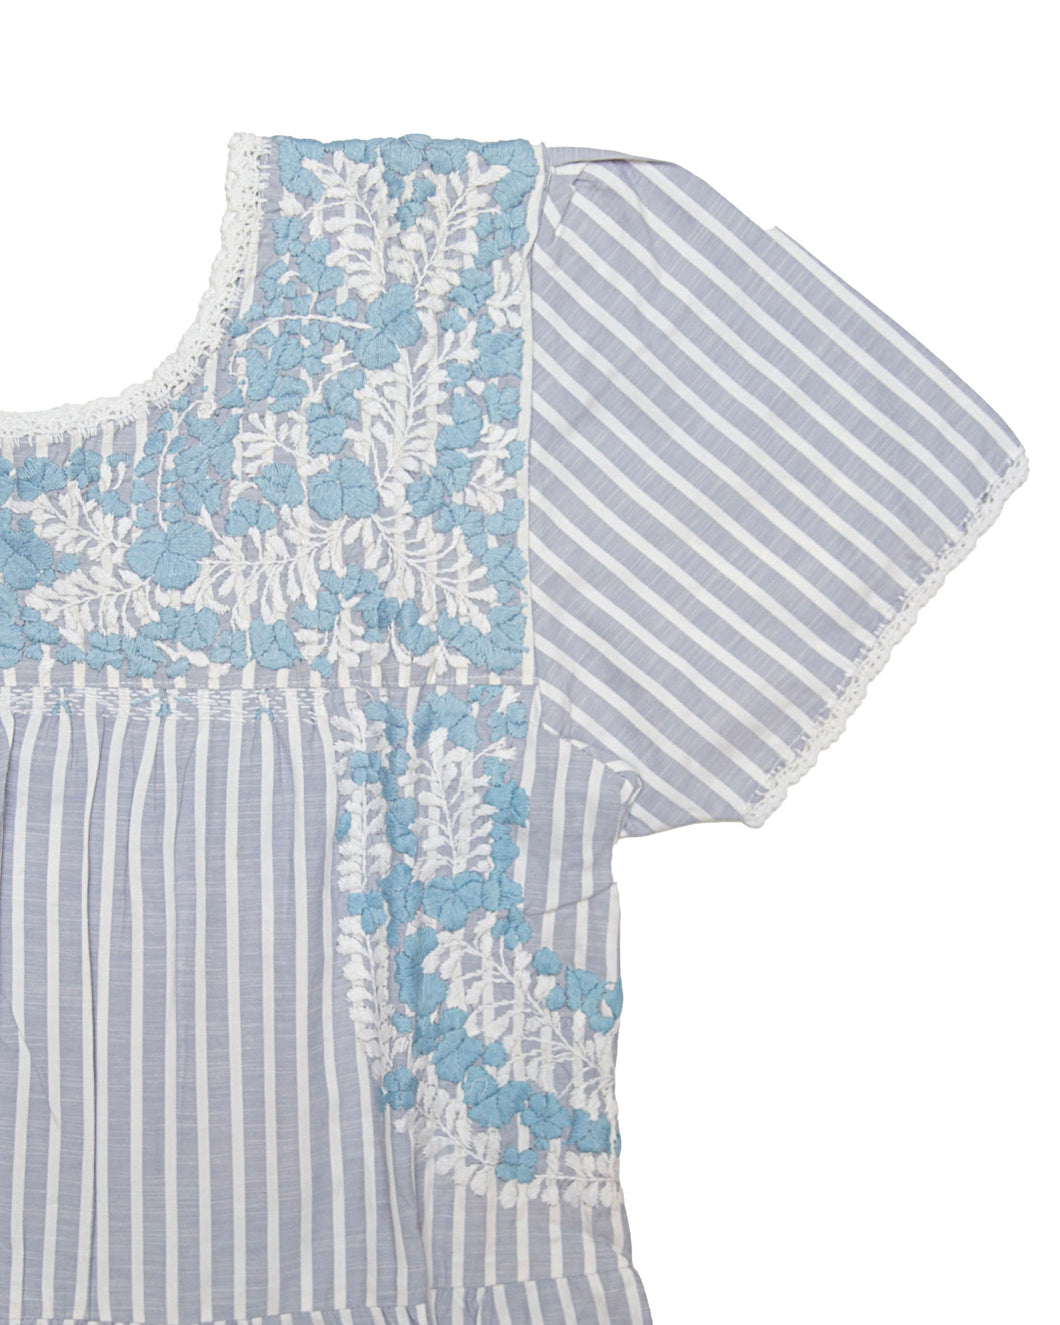 Gabriela Dress | Gray & White Stripes with Light Blue